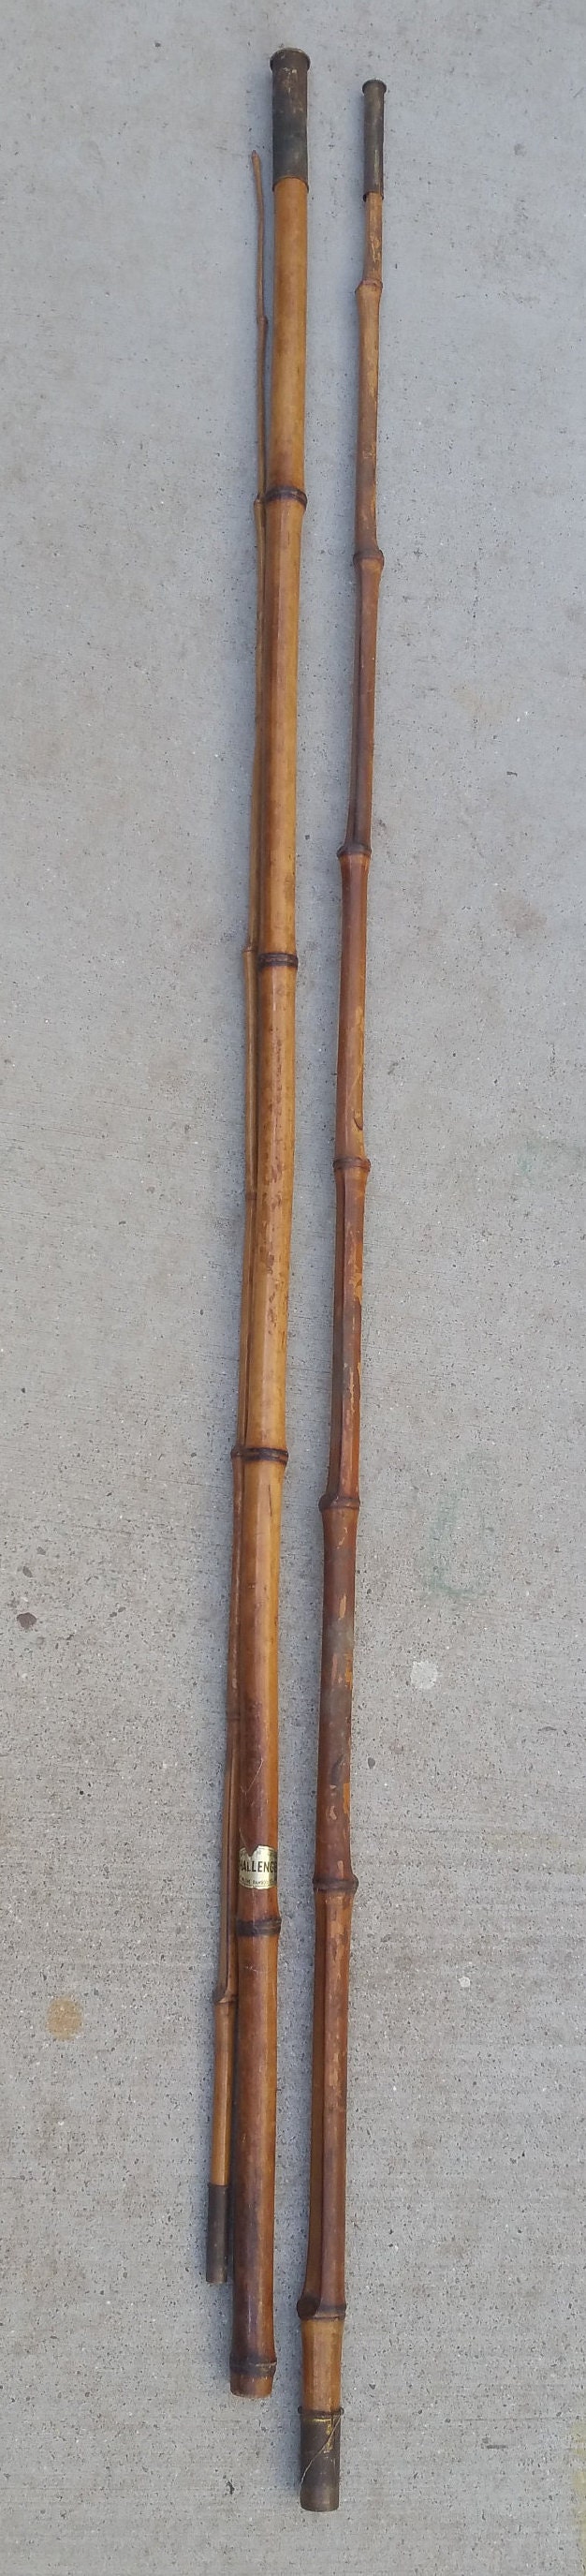 Vintage Bamboo Fishing Pole Challenger Brand 